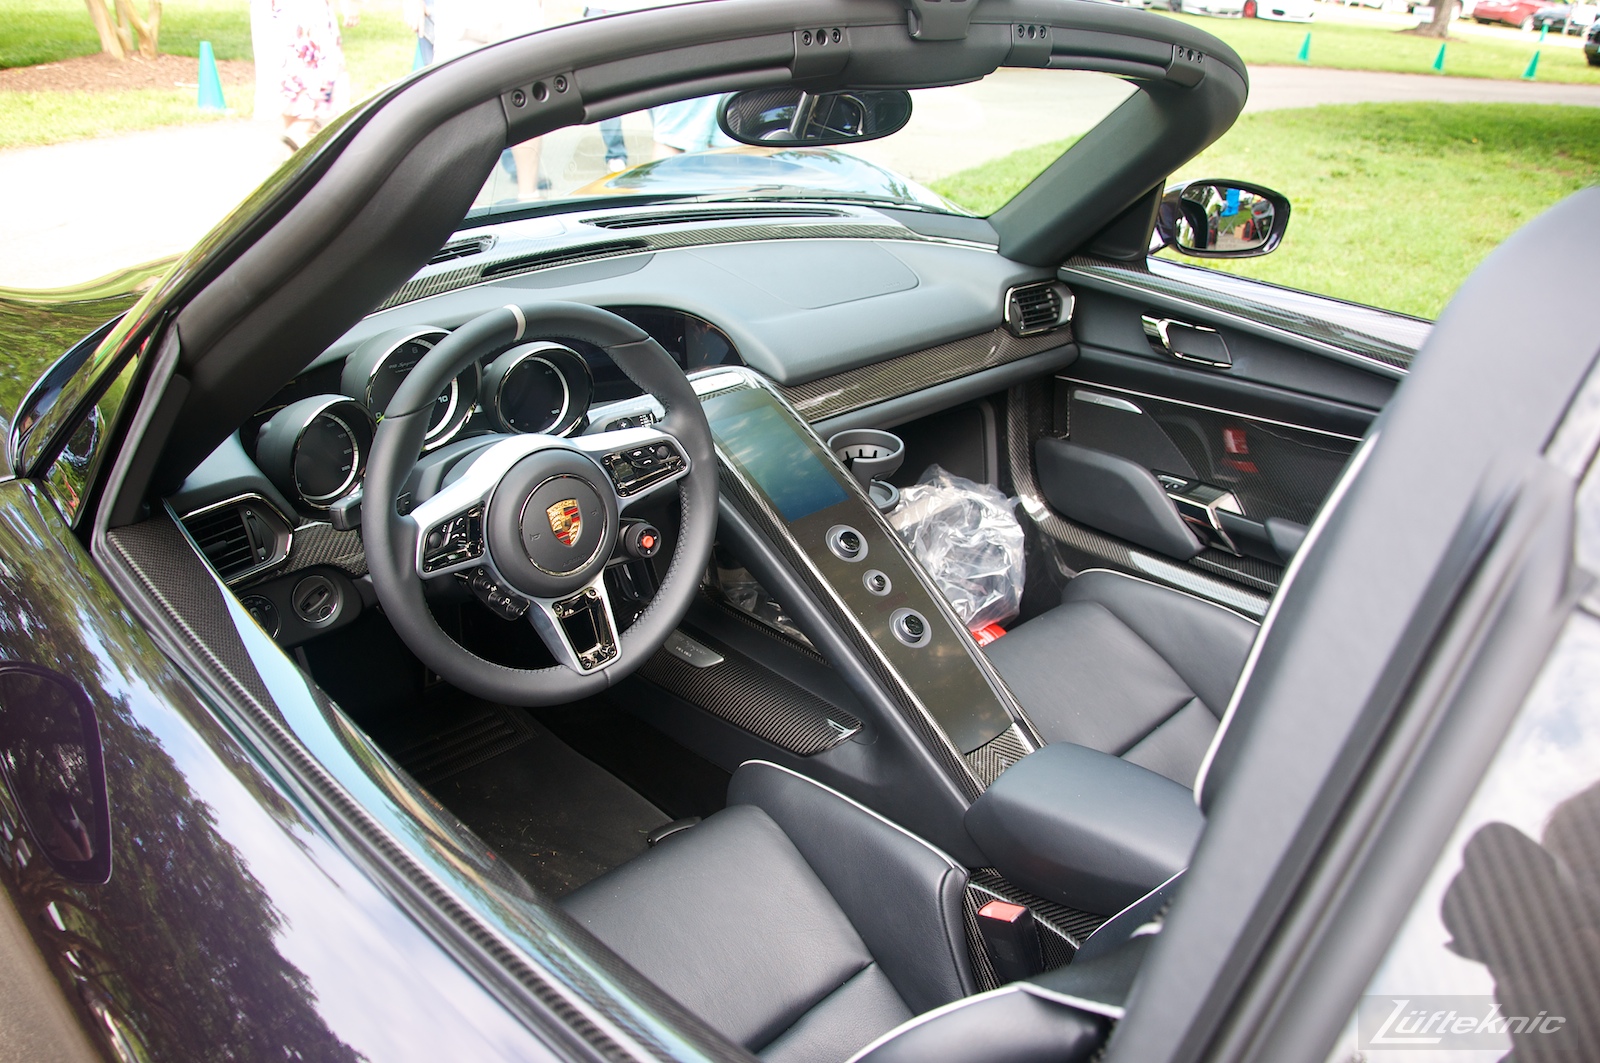 918 Spyder interior at the Richmond Porsche Meet.